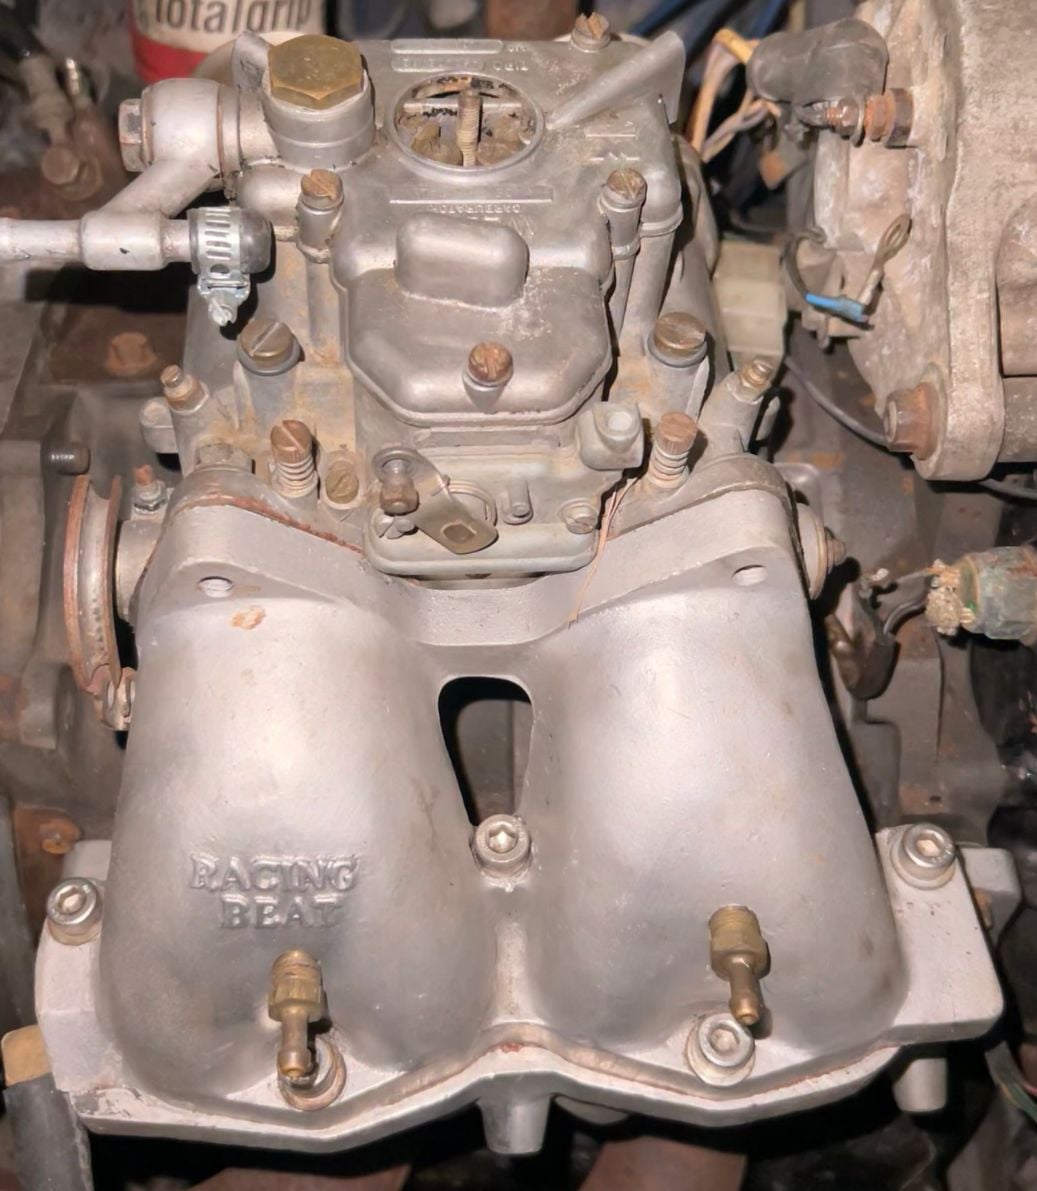 Engine - Intake/Fuel - Weber 45 DCOE w/ Racing Beat 2 piece intake - Used - 1981 to 1985 Mazda RX-7 - Lakeland, FL 33812, United States